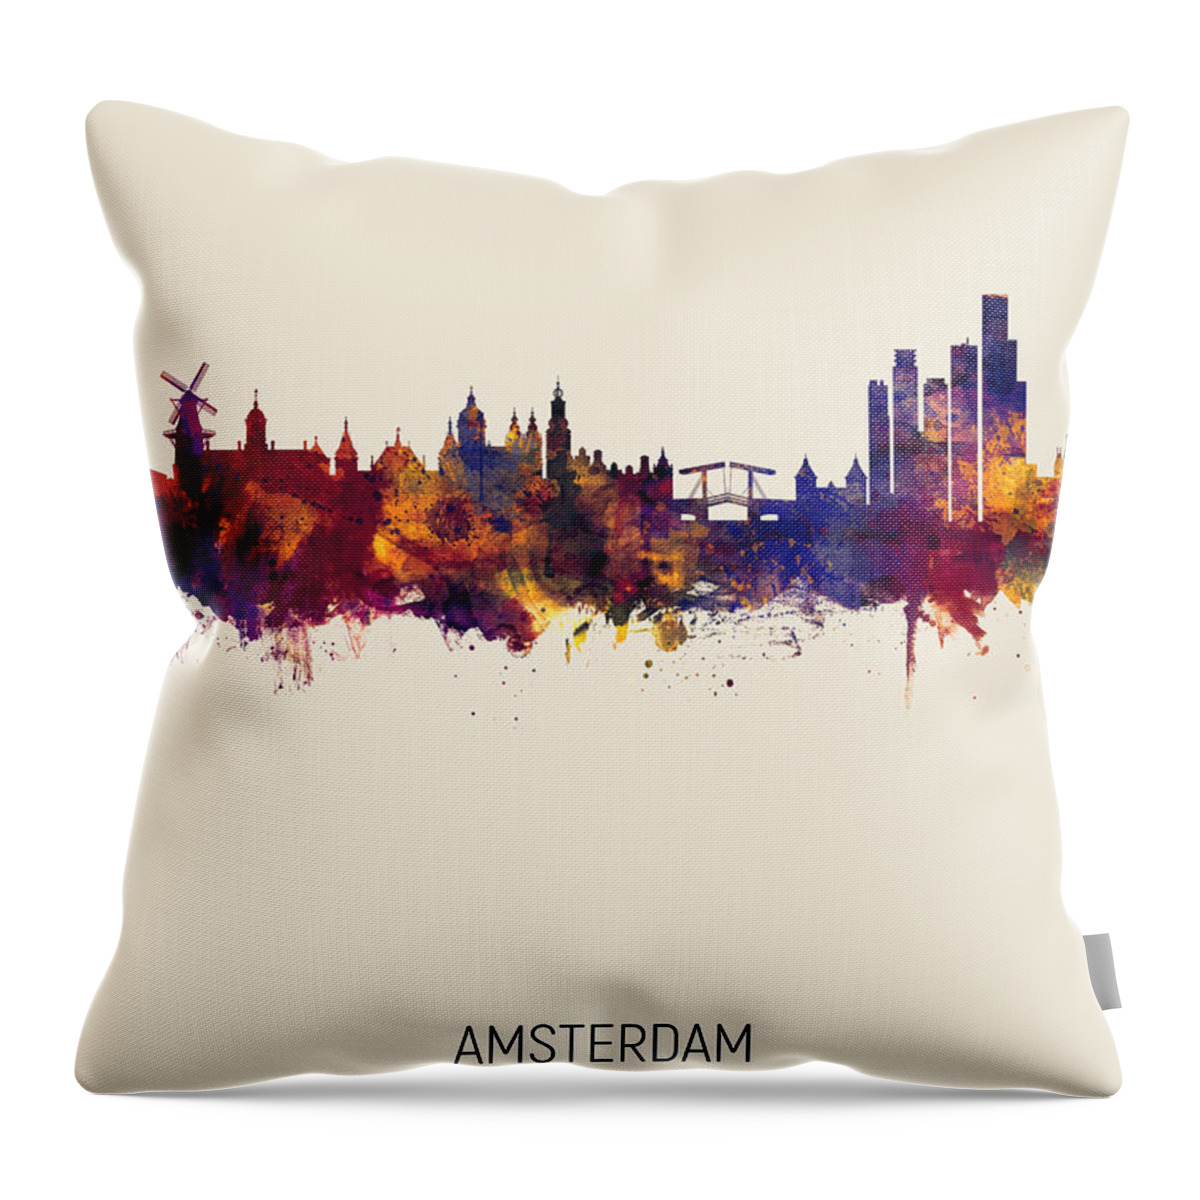 Amsterdam Throw Pillow featuring the digital art Amsterdam The Netherlands Skyline #10 by Michael Tompsett